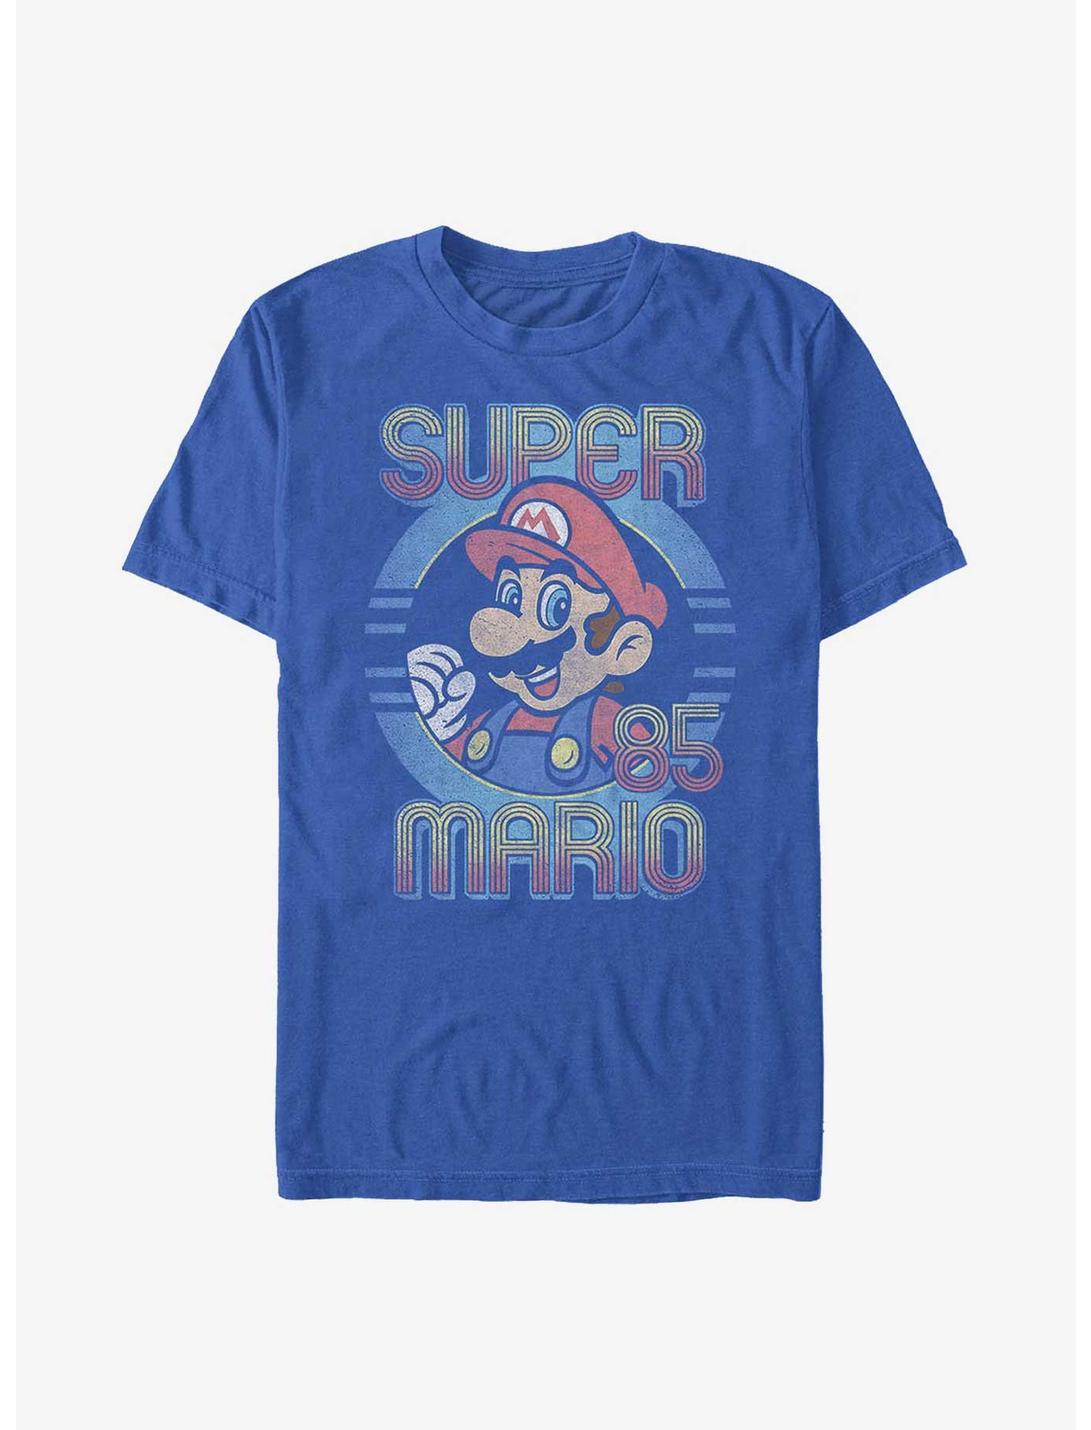 Nintendo Mario Super '85 Mario T-Shirt, ROYAL, hi-res